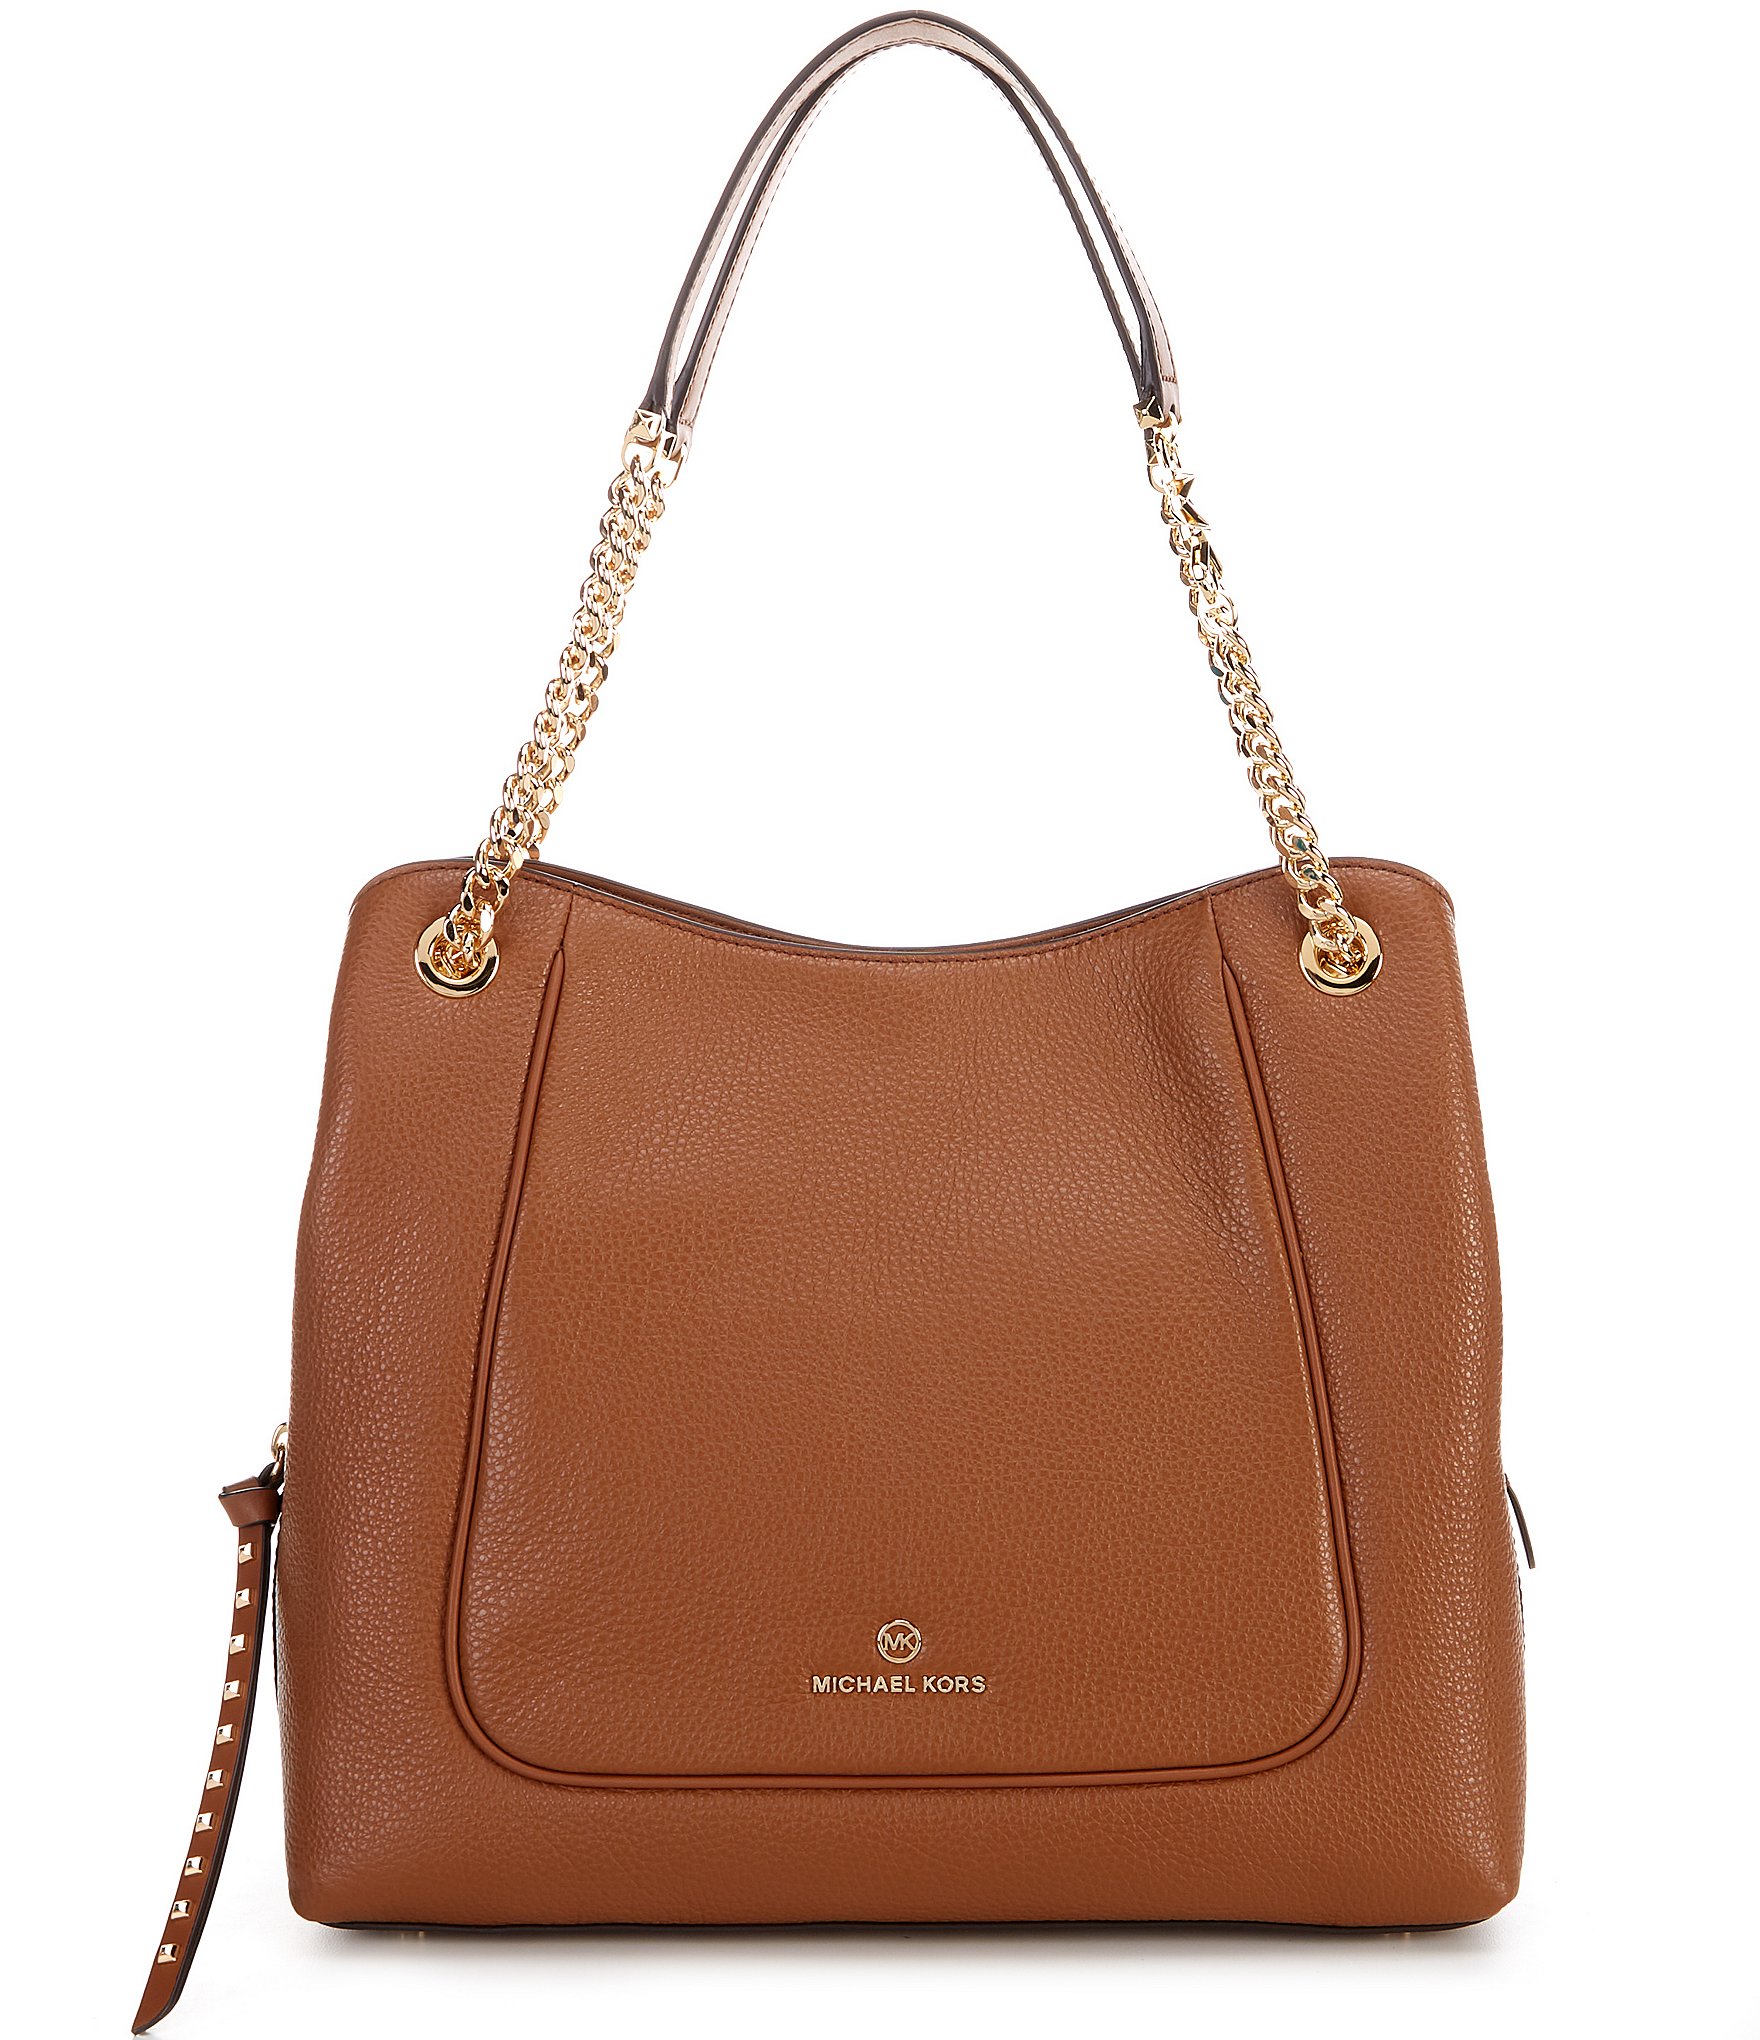 michael kors clearance purses: Women's Shoulder Bags | Dillard's